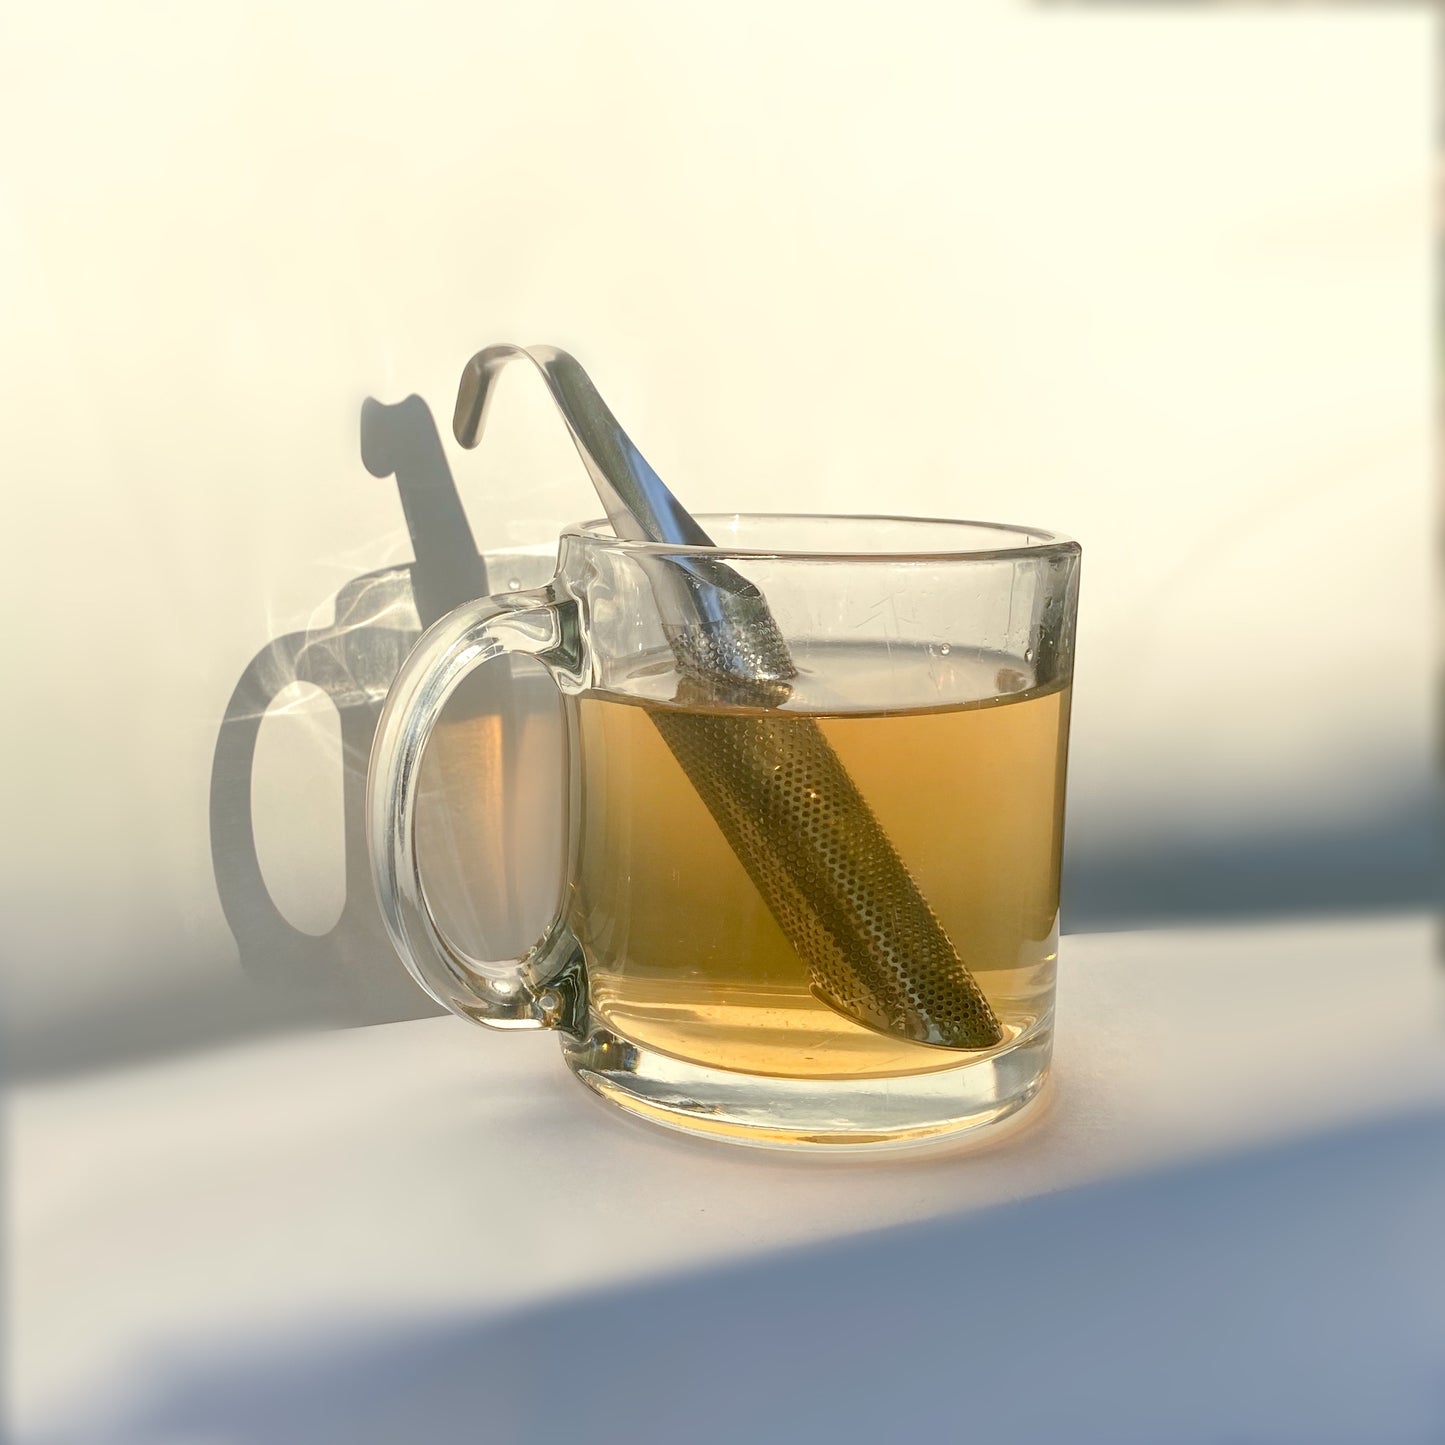 Stainless Steel Tea Steeper